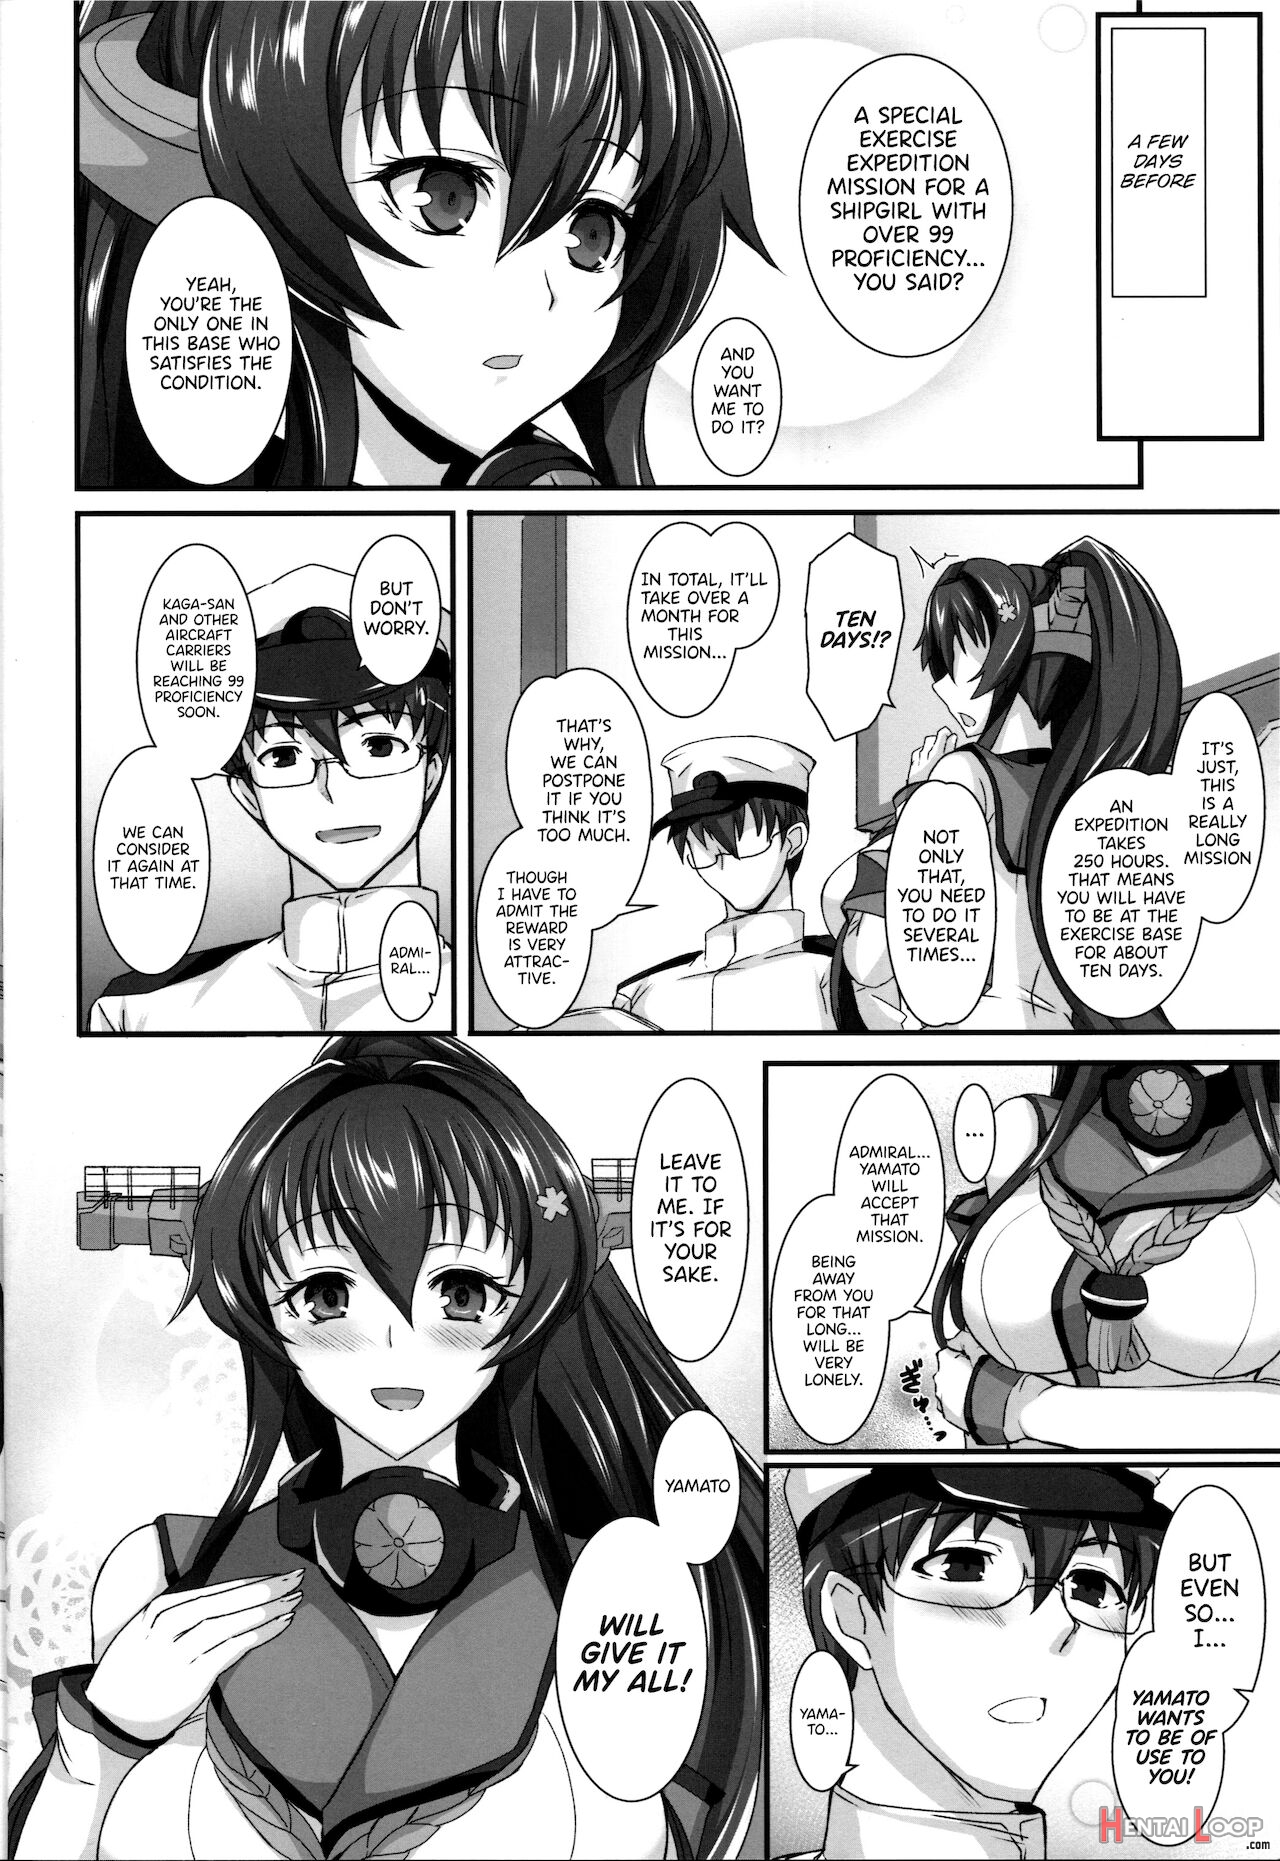 Stolen Battleship Yamato page 3